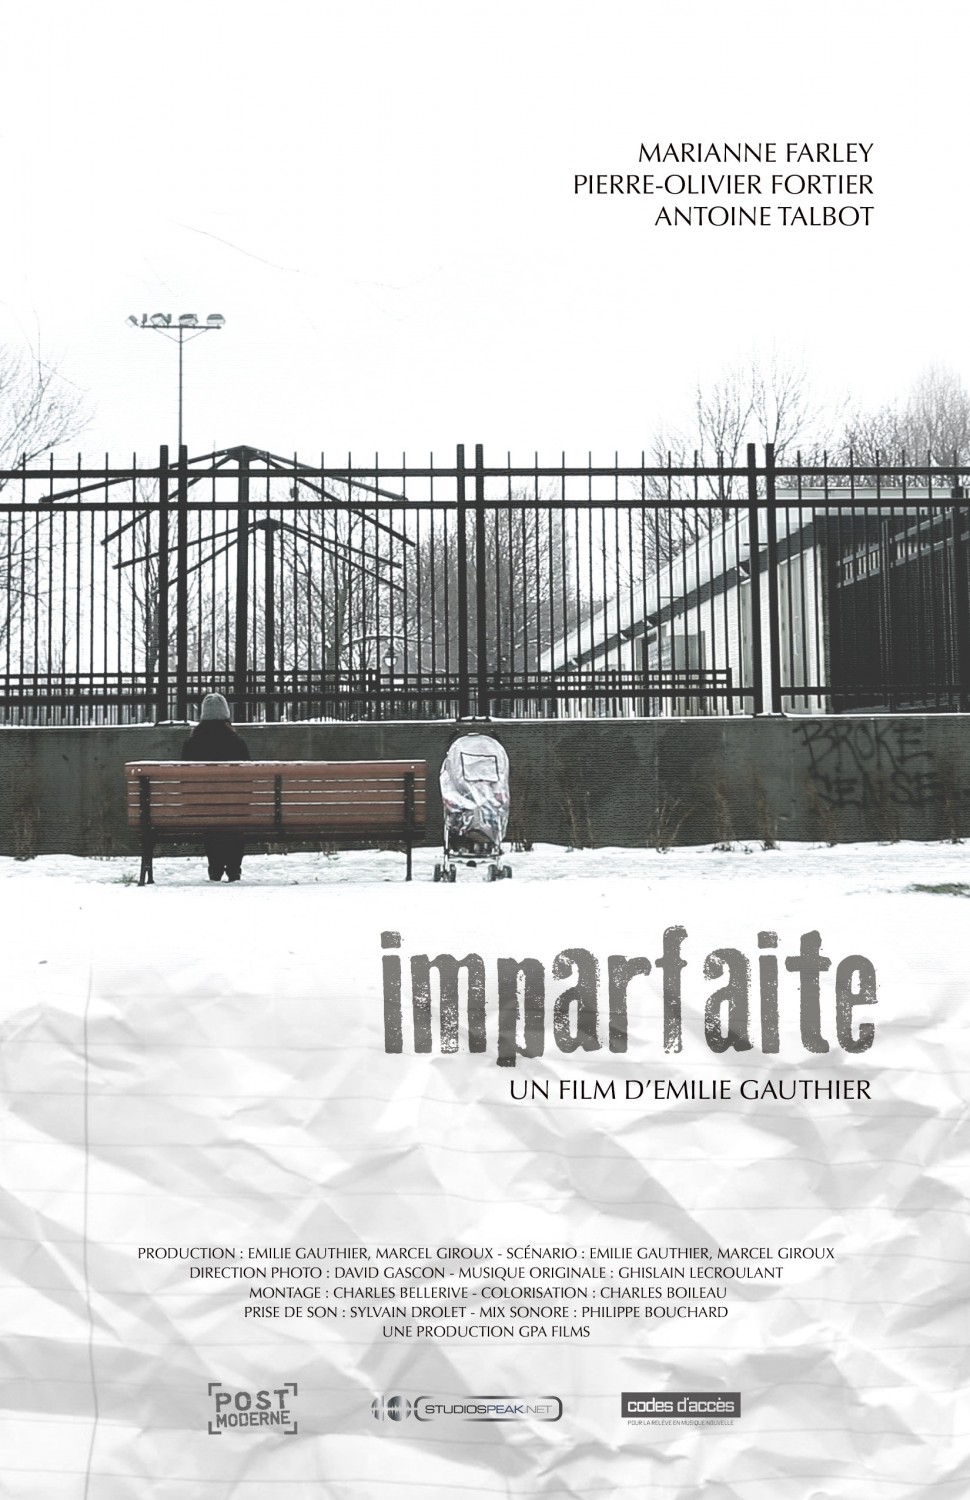 Extra Large Movie Poster Image for Imparfaite